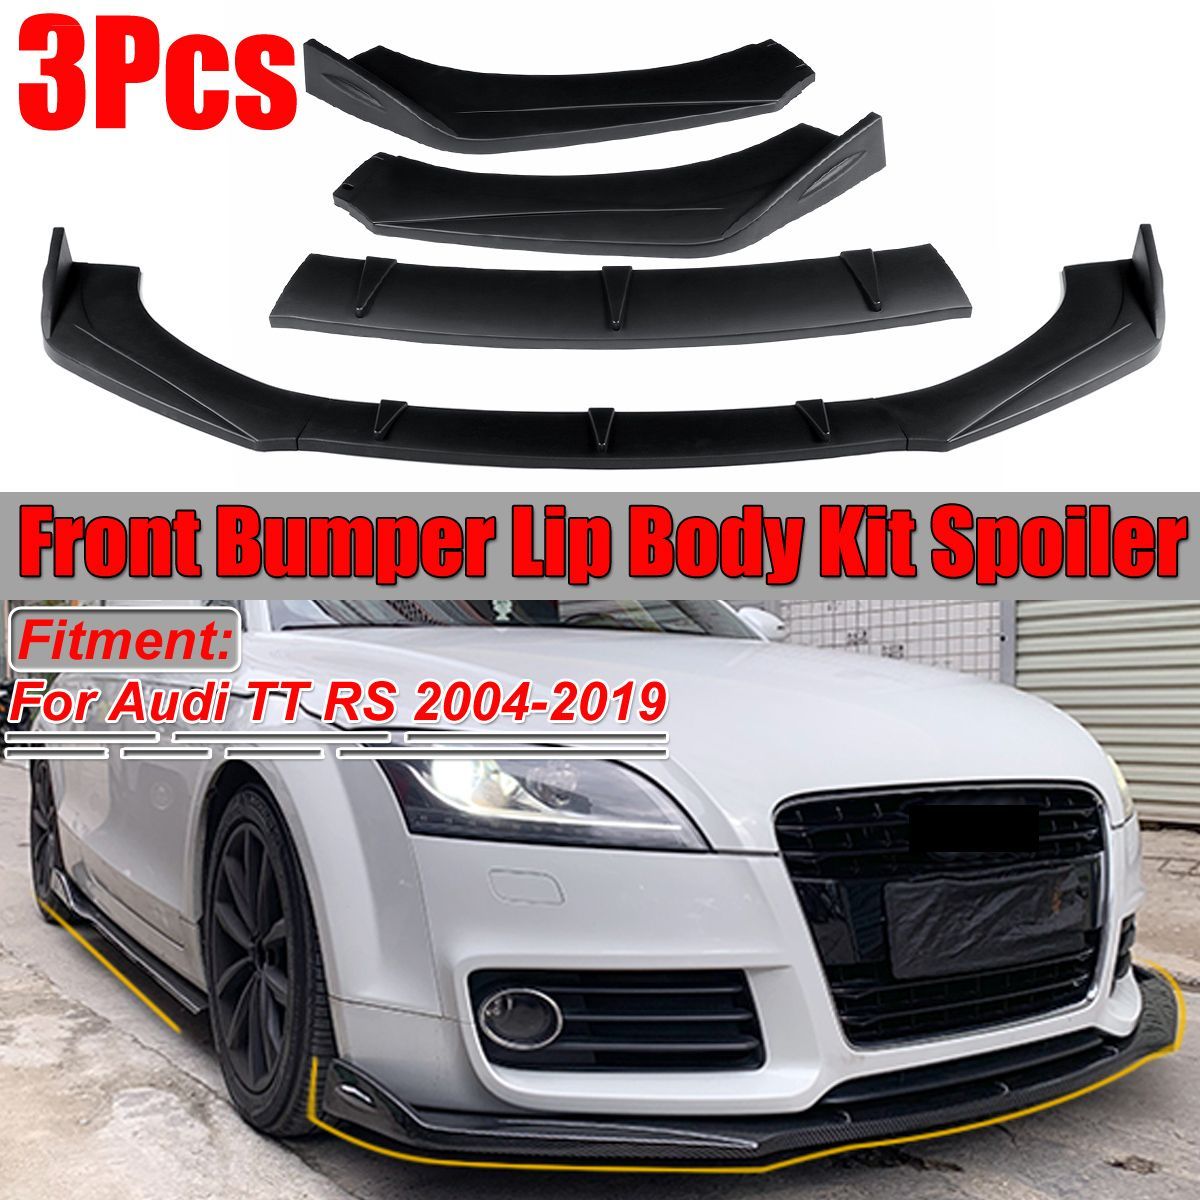 3Pcs-Matte-Black-Car-Front-Bumper-Lip-Body-Spoiler-Wing-Kit-For-Audi-TT-RS-2004-2019-1581775